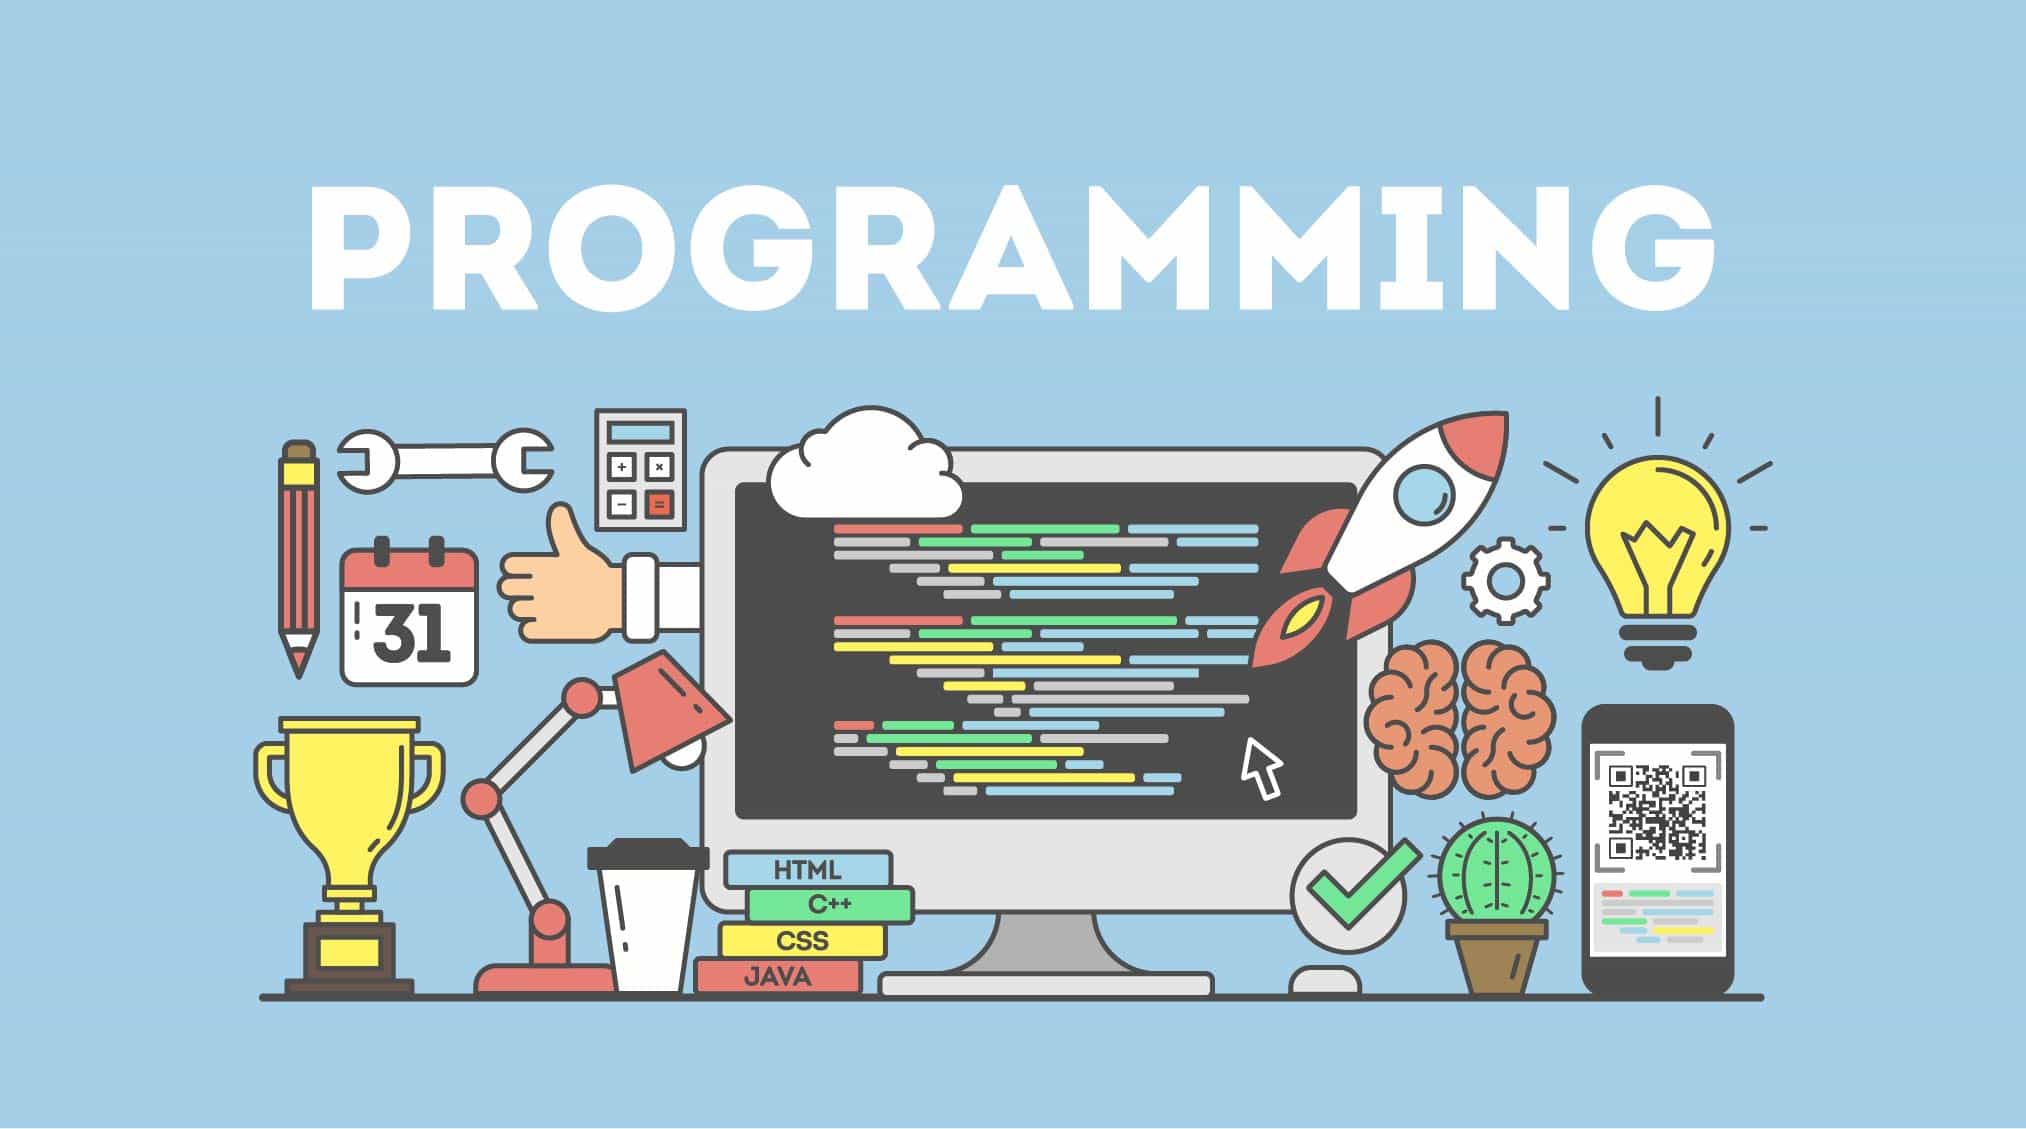 Programming streams